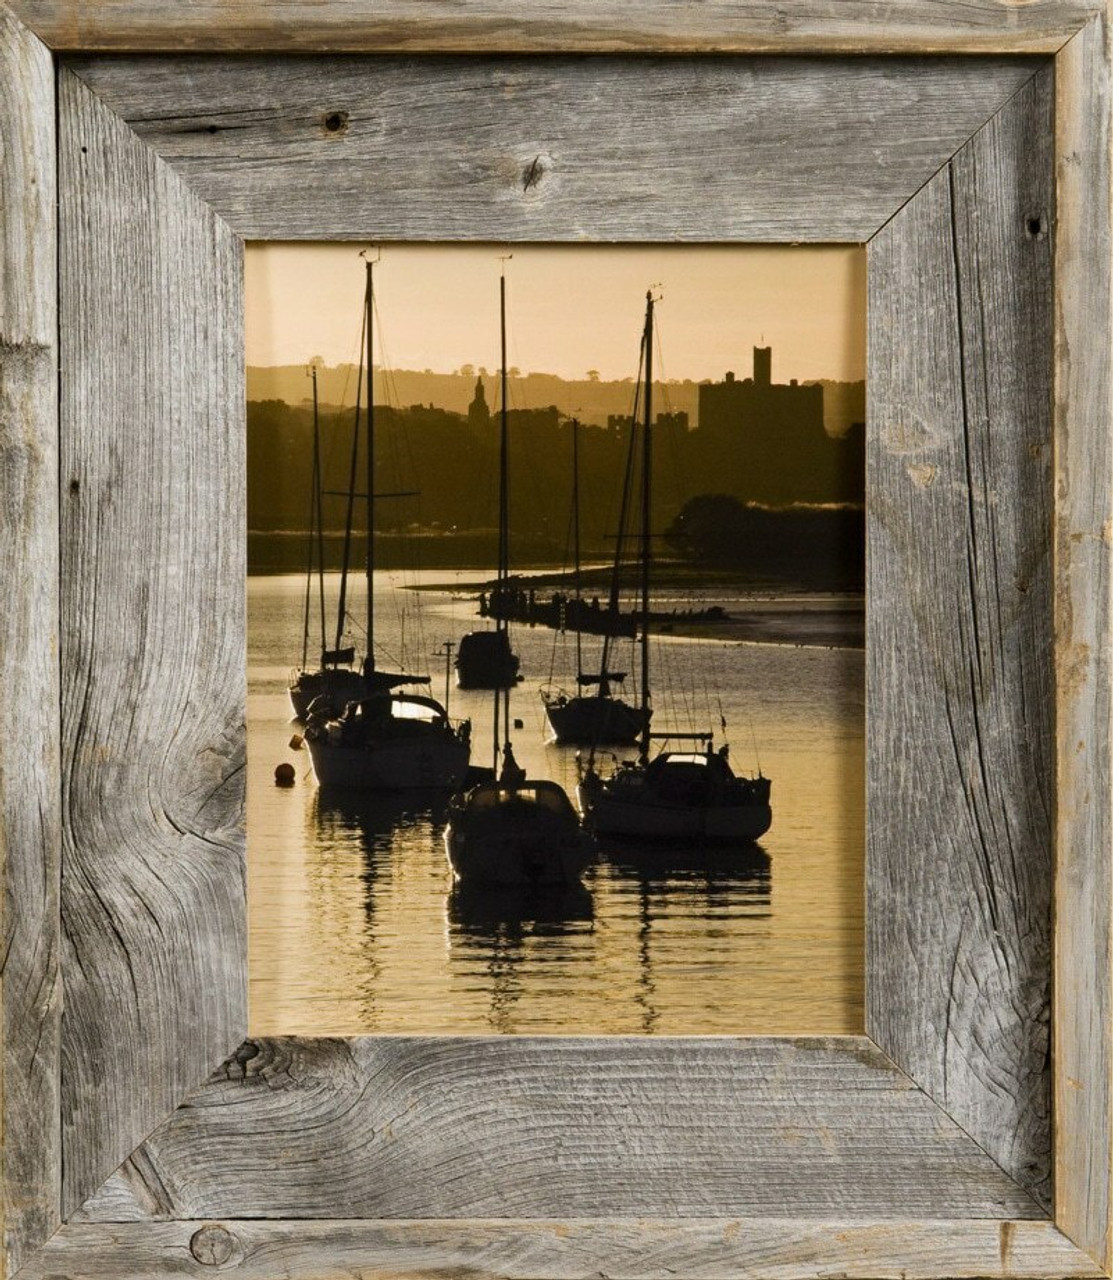 BARNWOODUSA | Farmhouse 8x8 Picture Frame | 1 1/2 inch Molding | 100%  Reclaimed Wood | Rustic | Espresso